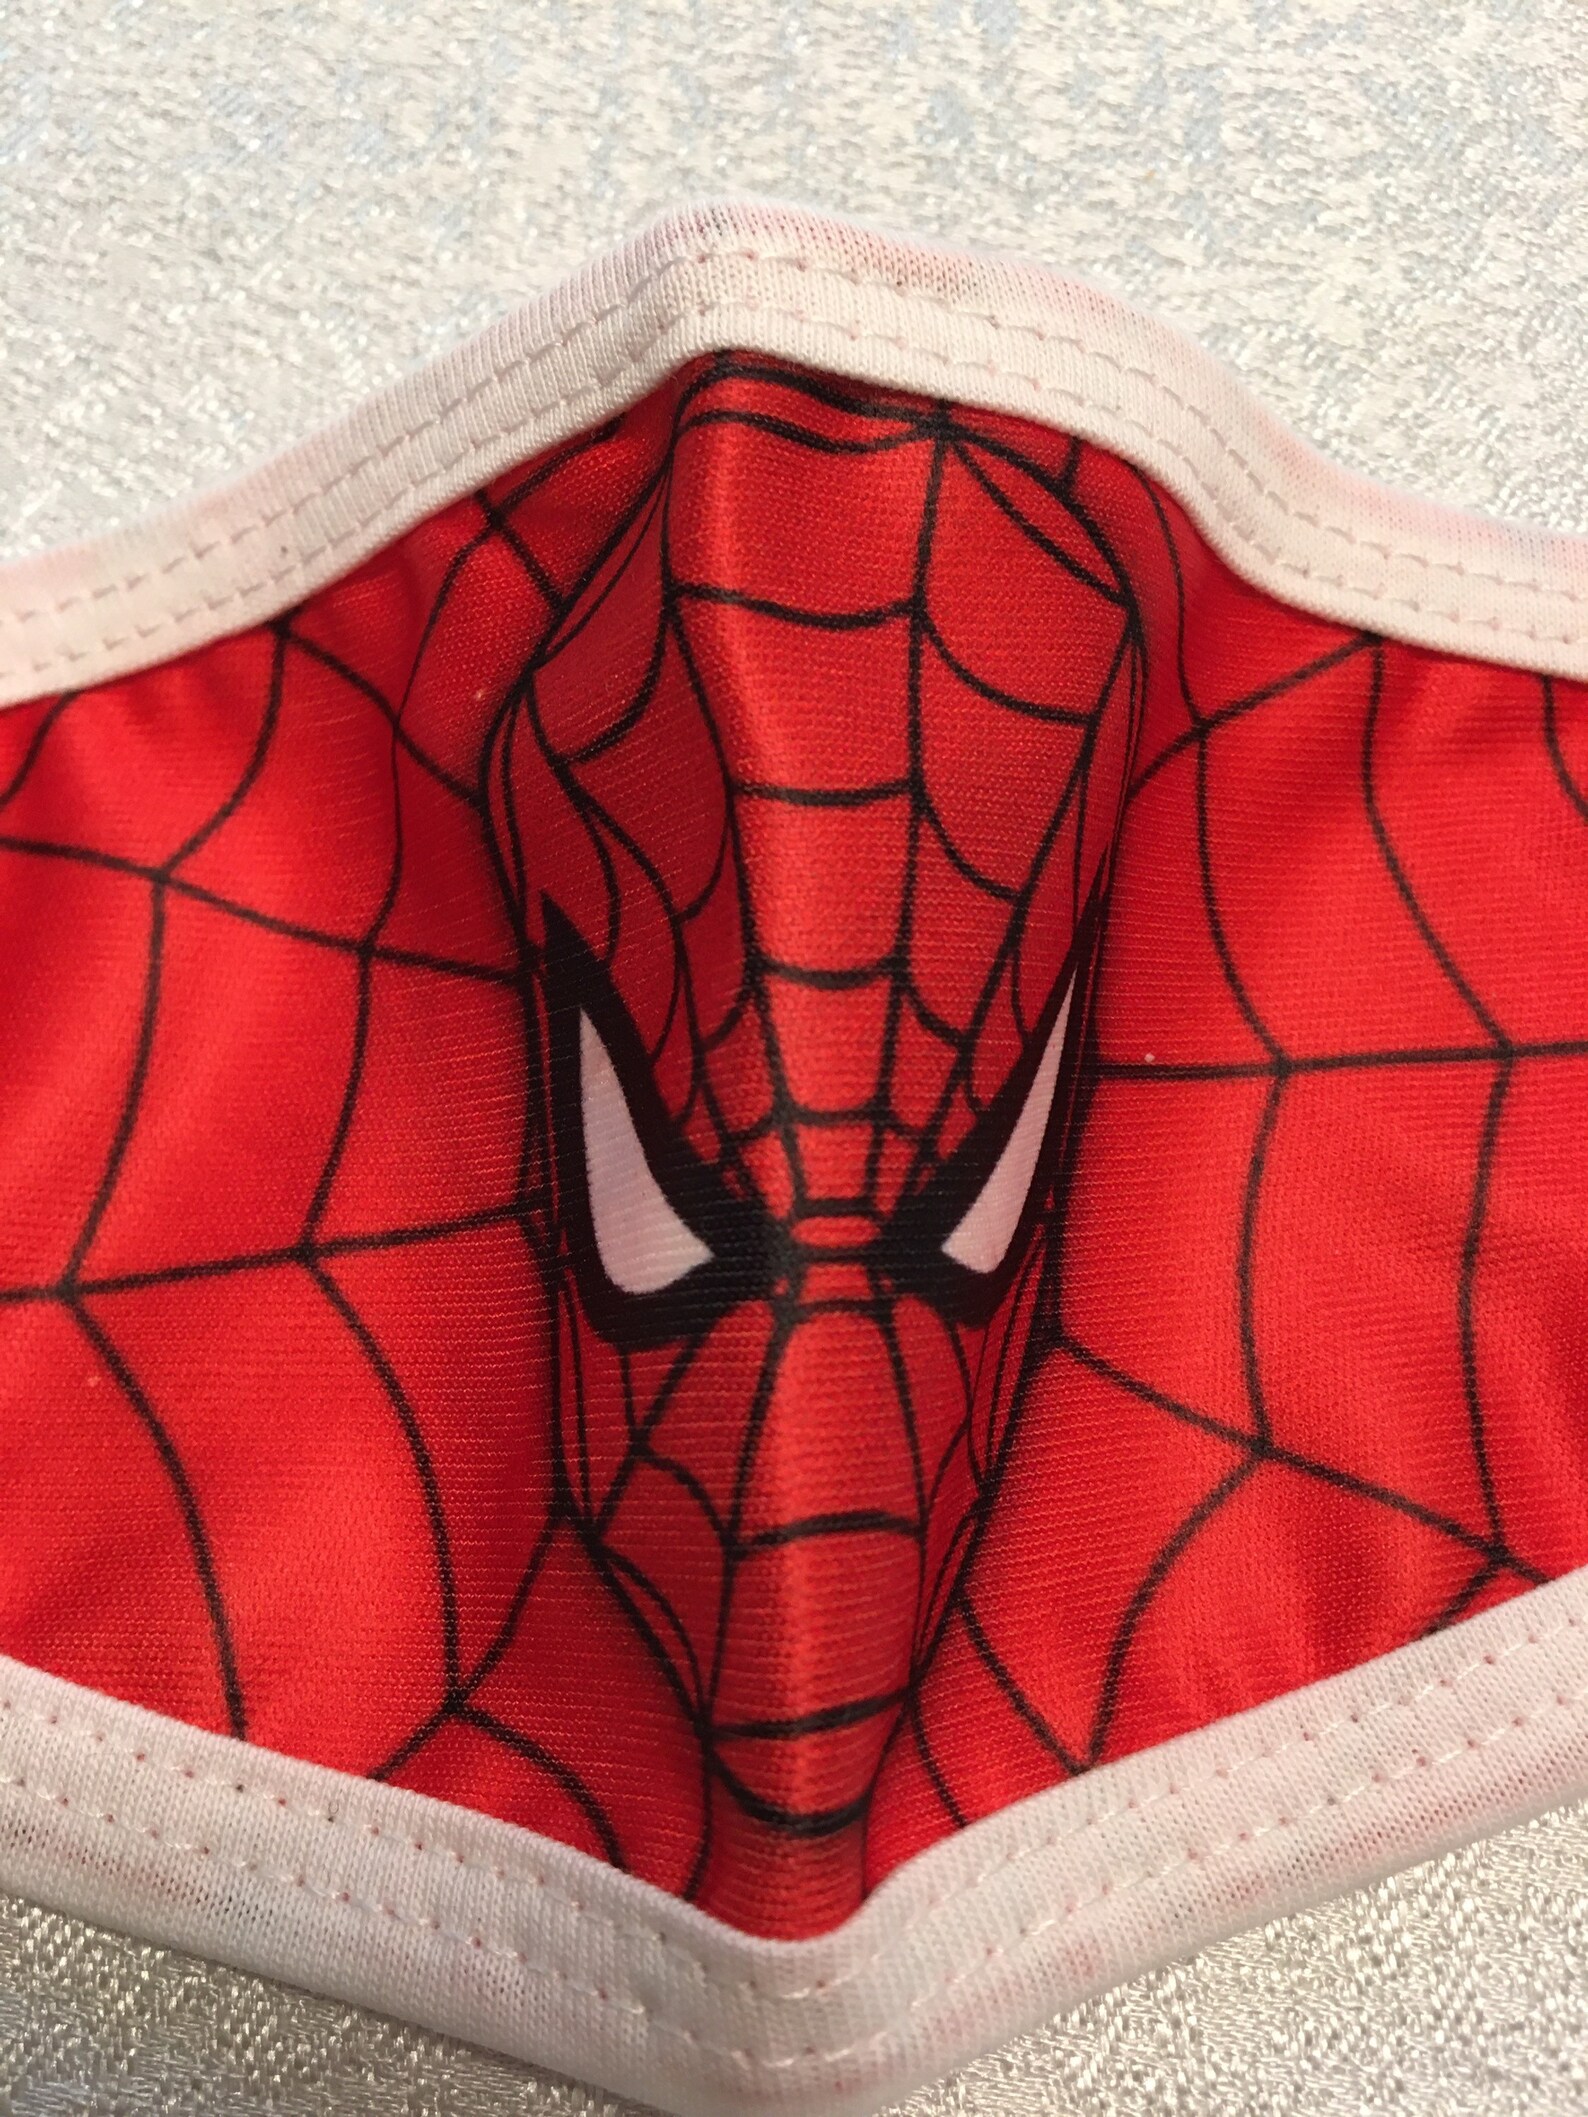 Kids Face Mask Spiderman soft quality stitched washable | Etsy